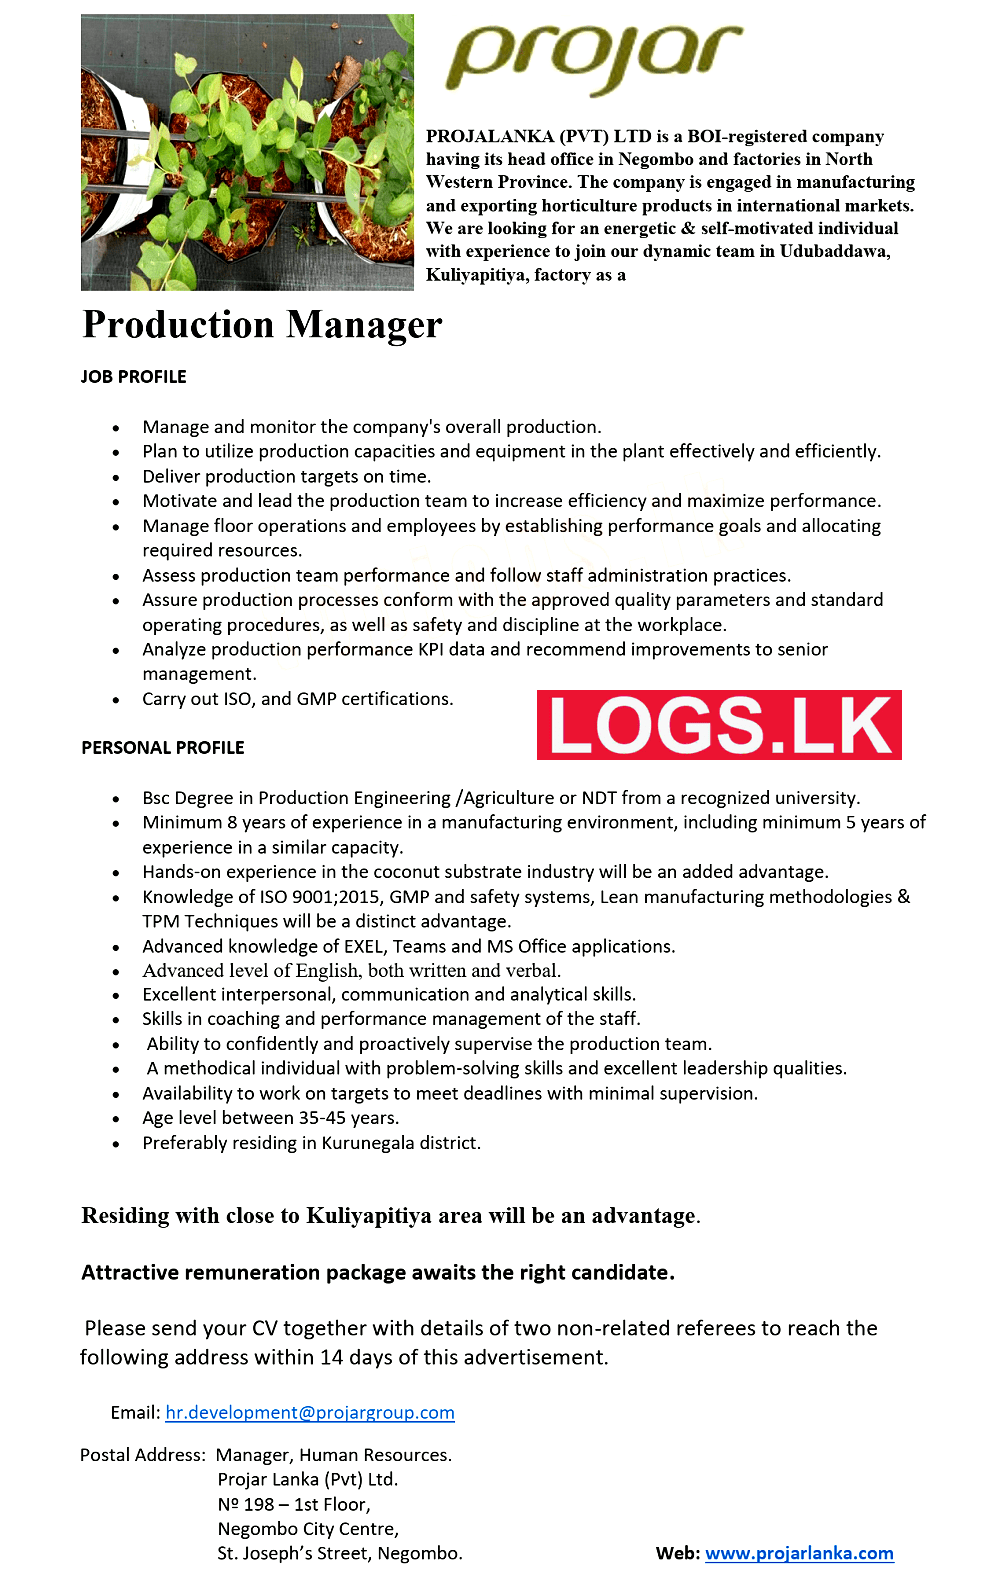 Production Manager Job Vacancy at Projar Lanka (Pvt) Ltd Job Vacancies